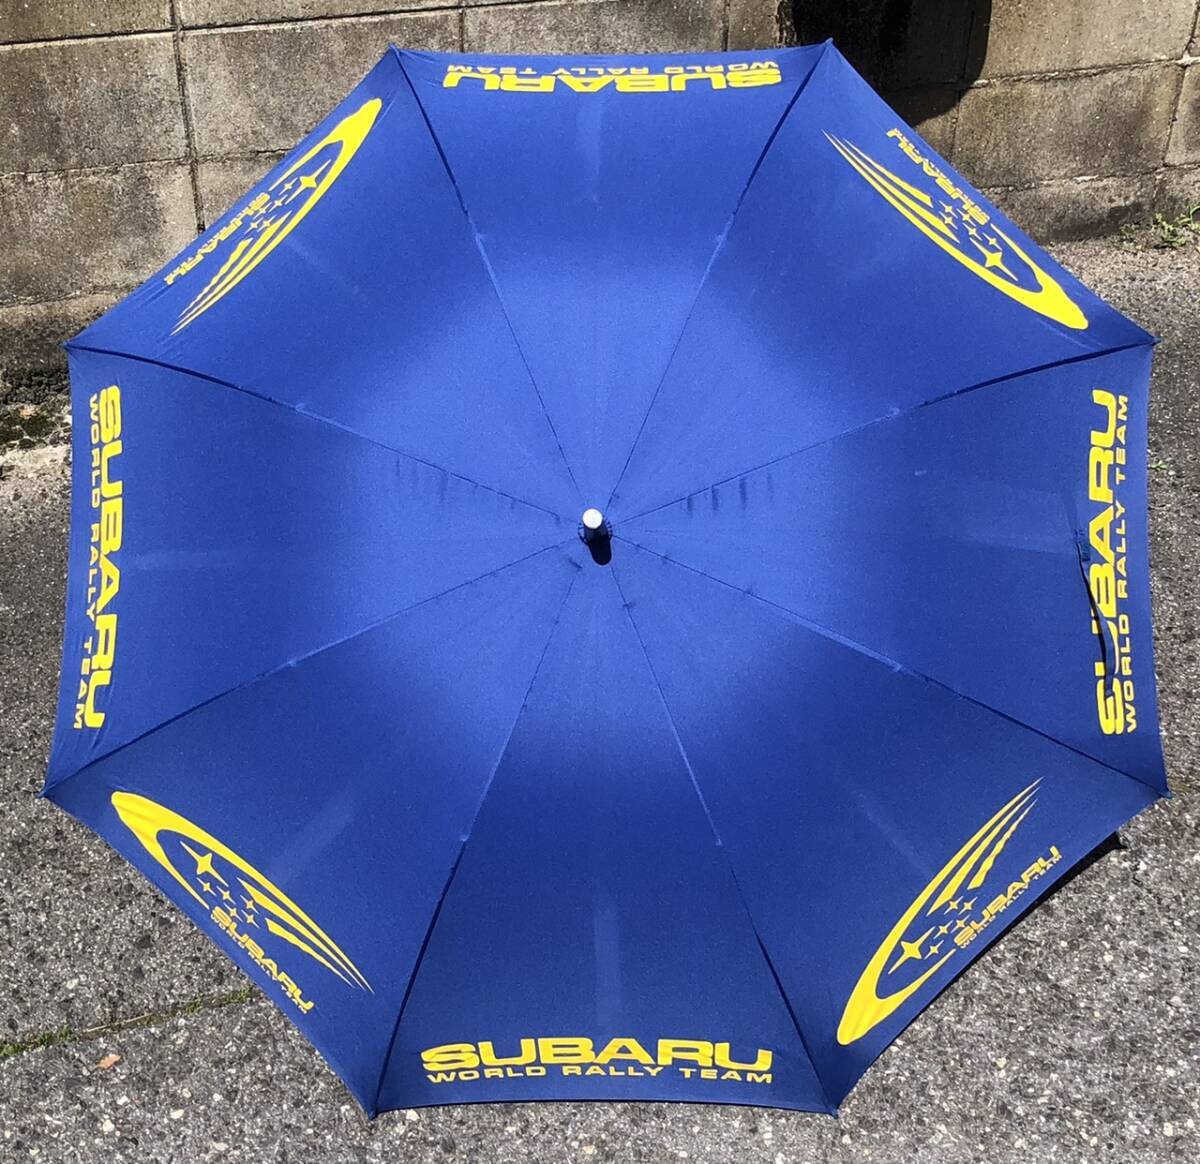  valuable!*SUBARU Subaru supplied goods racing parasol umbrella not for sale * Legacy Legacy 